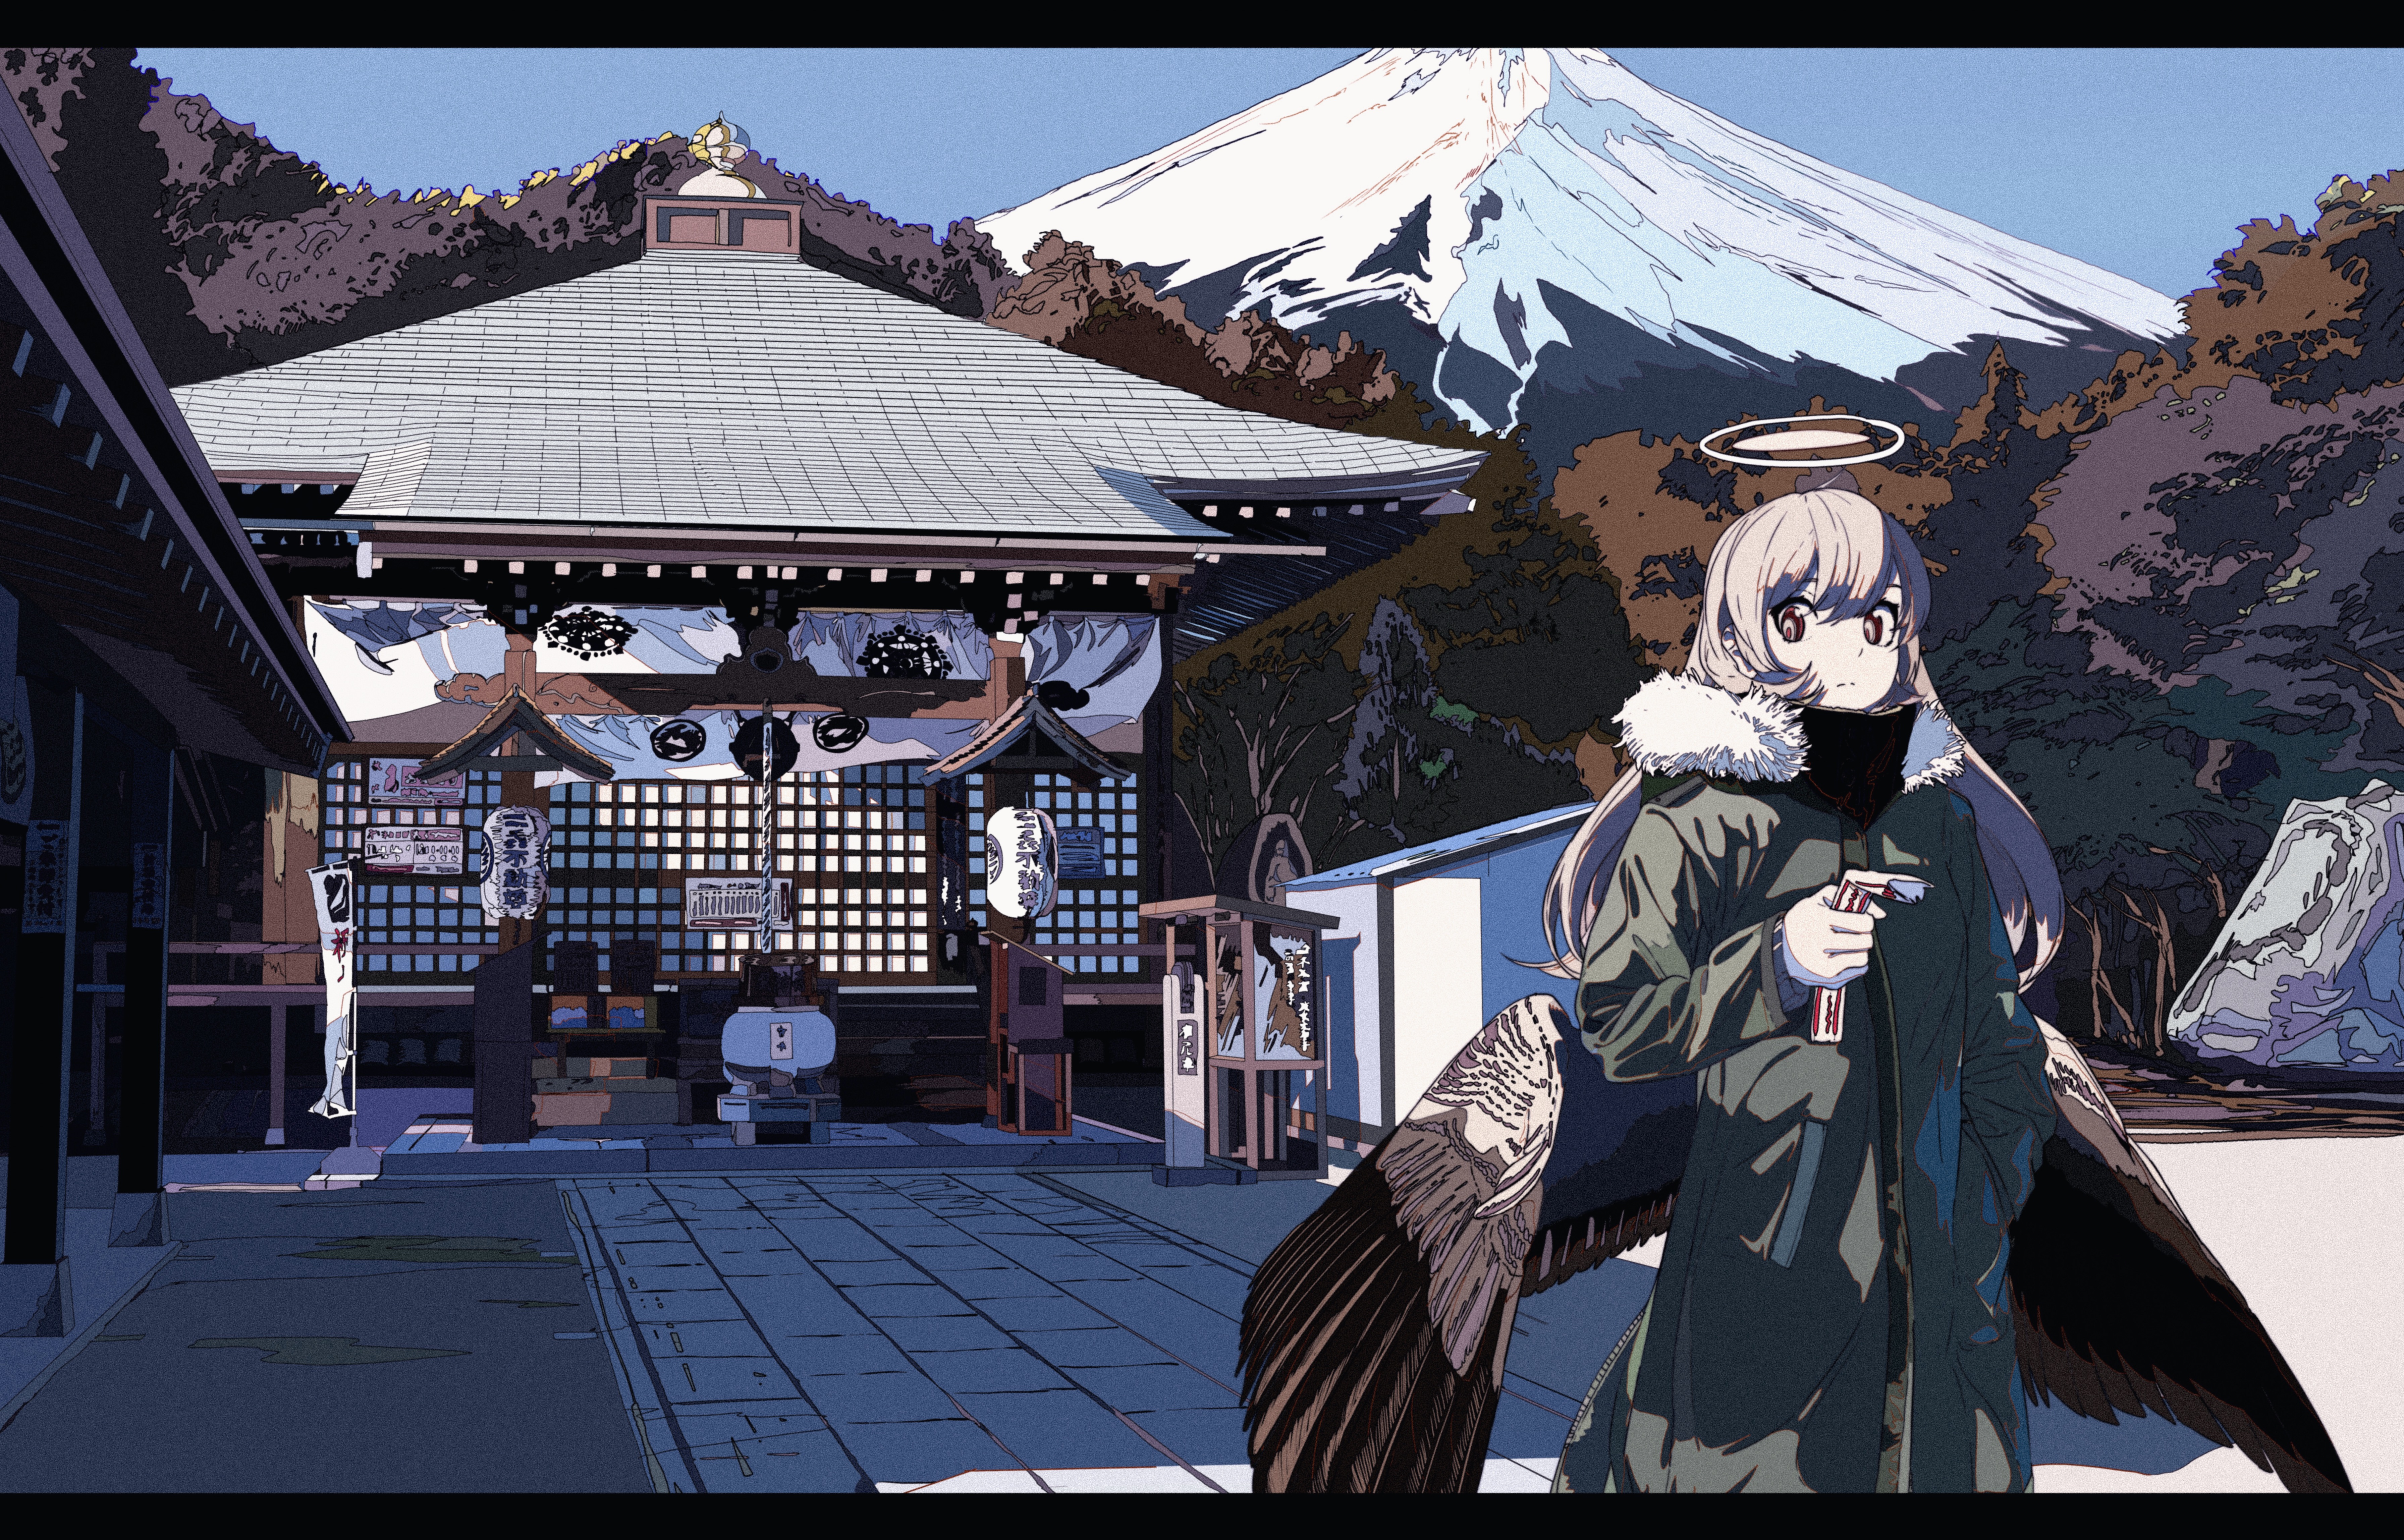 Anime 7168x4593 wings shrine mountain top white Japan artwork